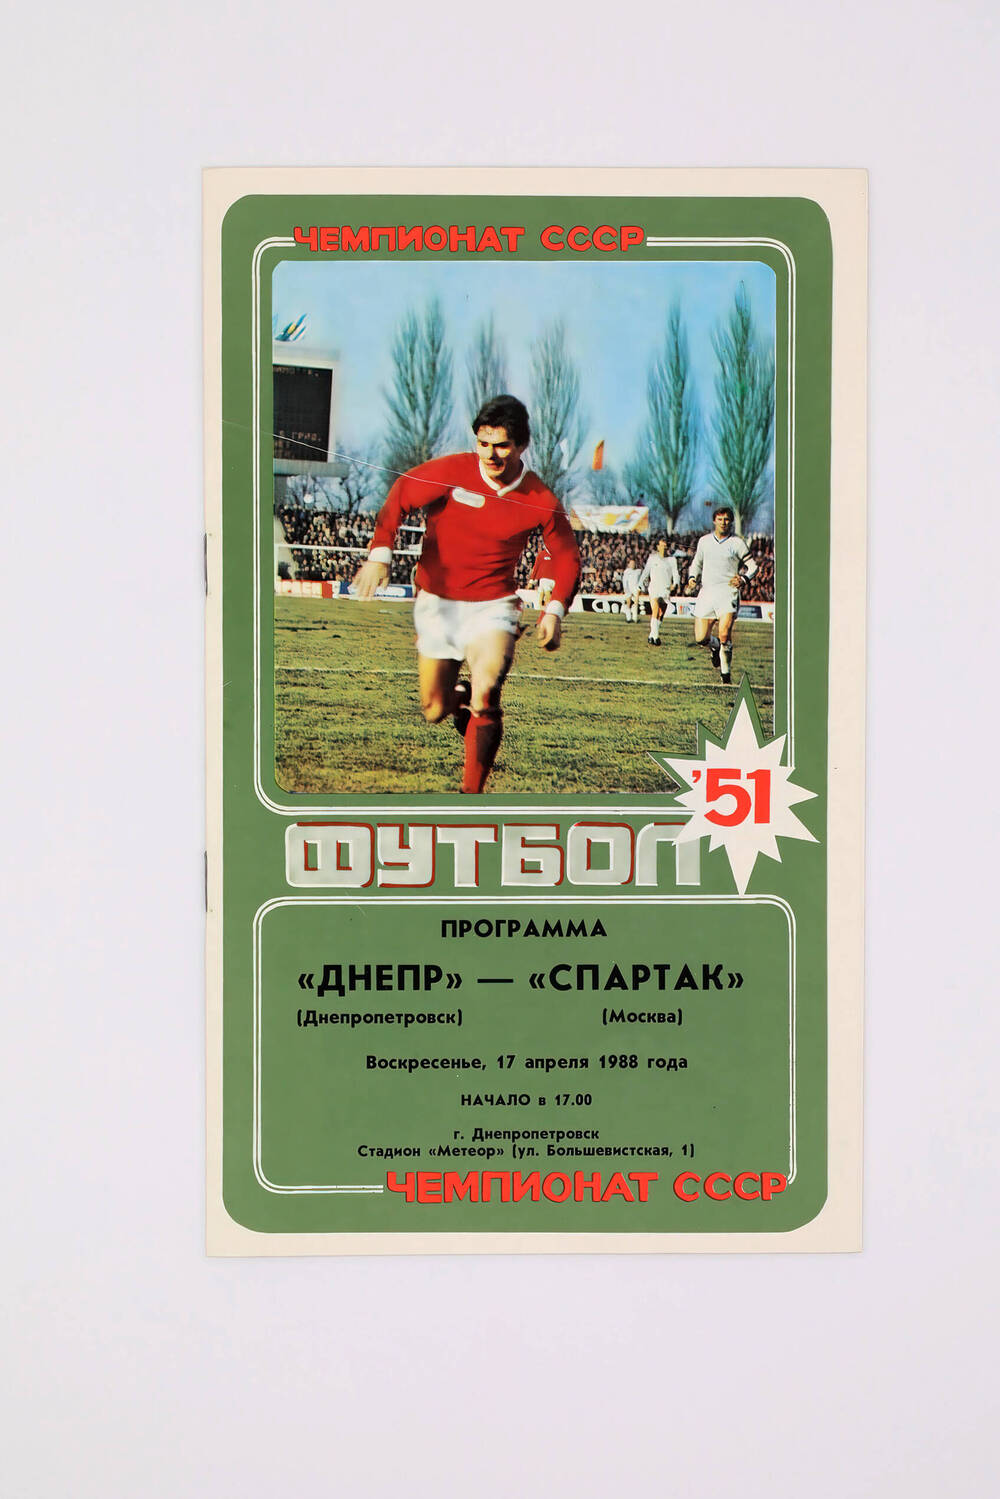 Программа матча «Днепр» (Днепропетровск)-«Спартак» (Москва) 17 апреля 1988 г.